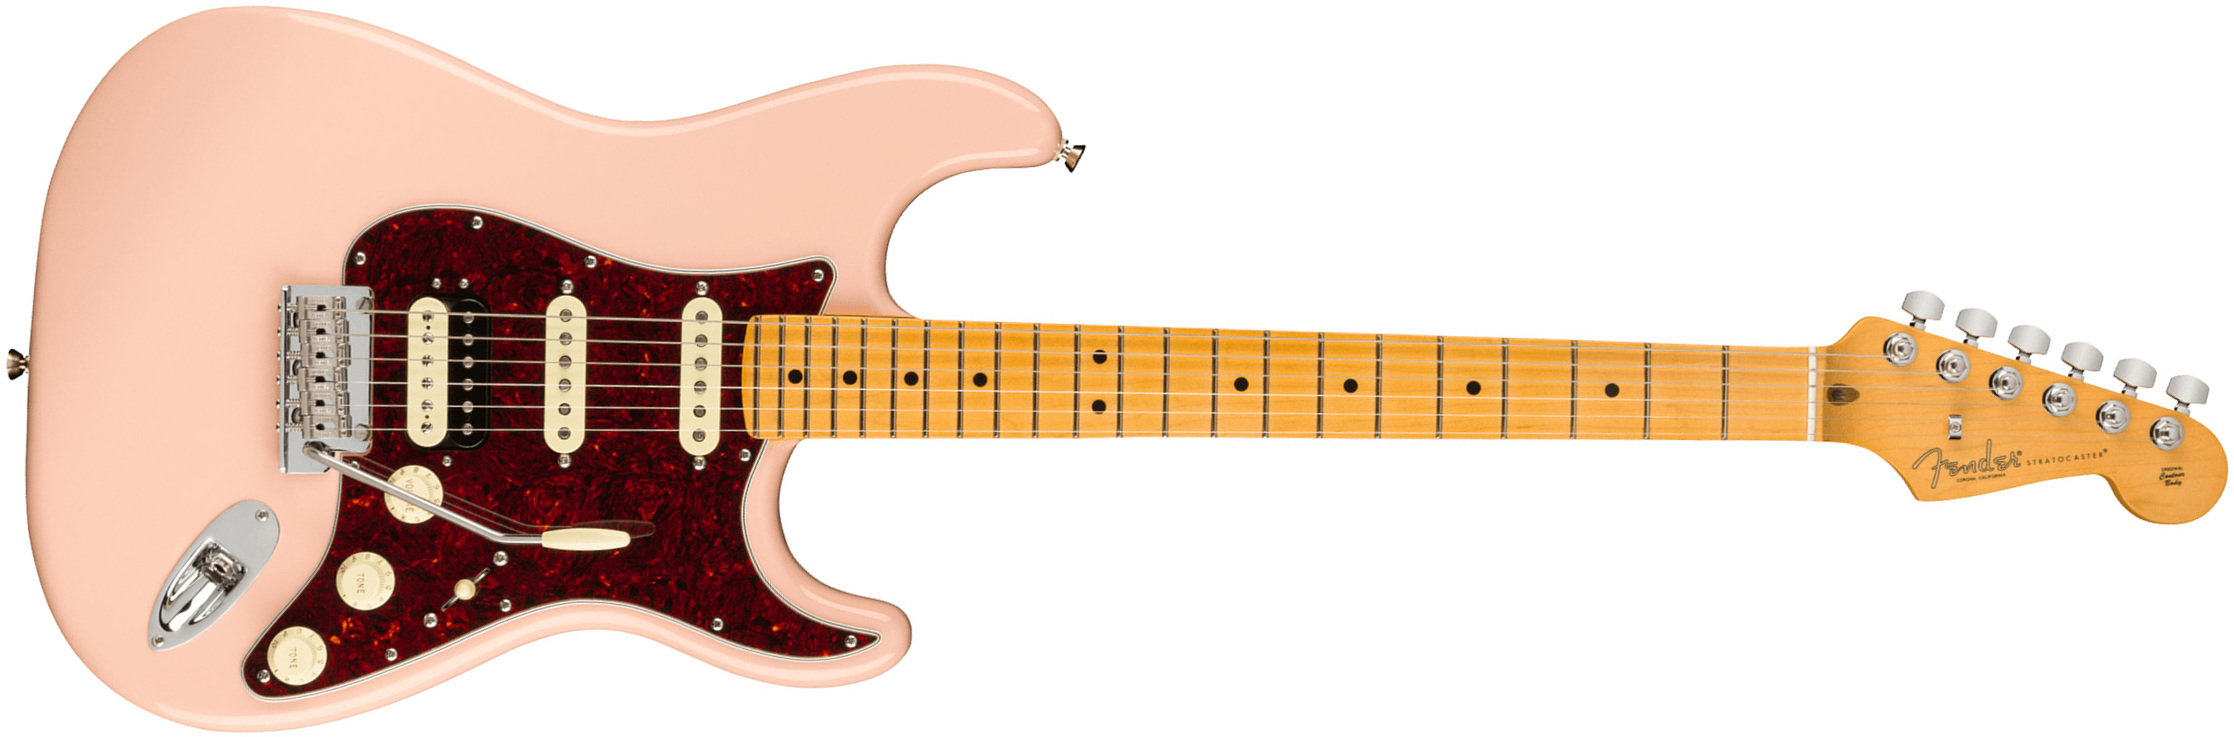 Fender Strat American Pro Ii Ltd Hss Trem Mn - Shell Pink - Str shape electric guitar - Main picture